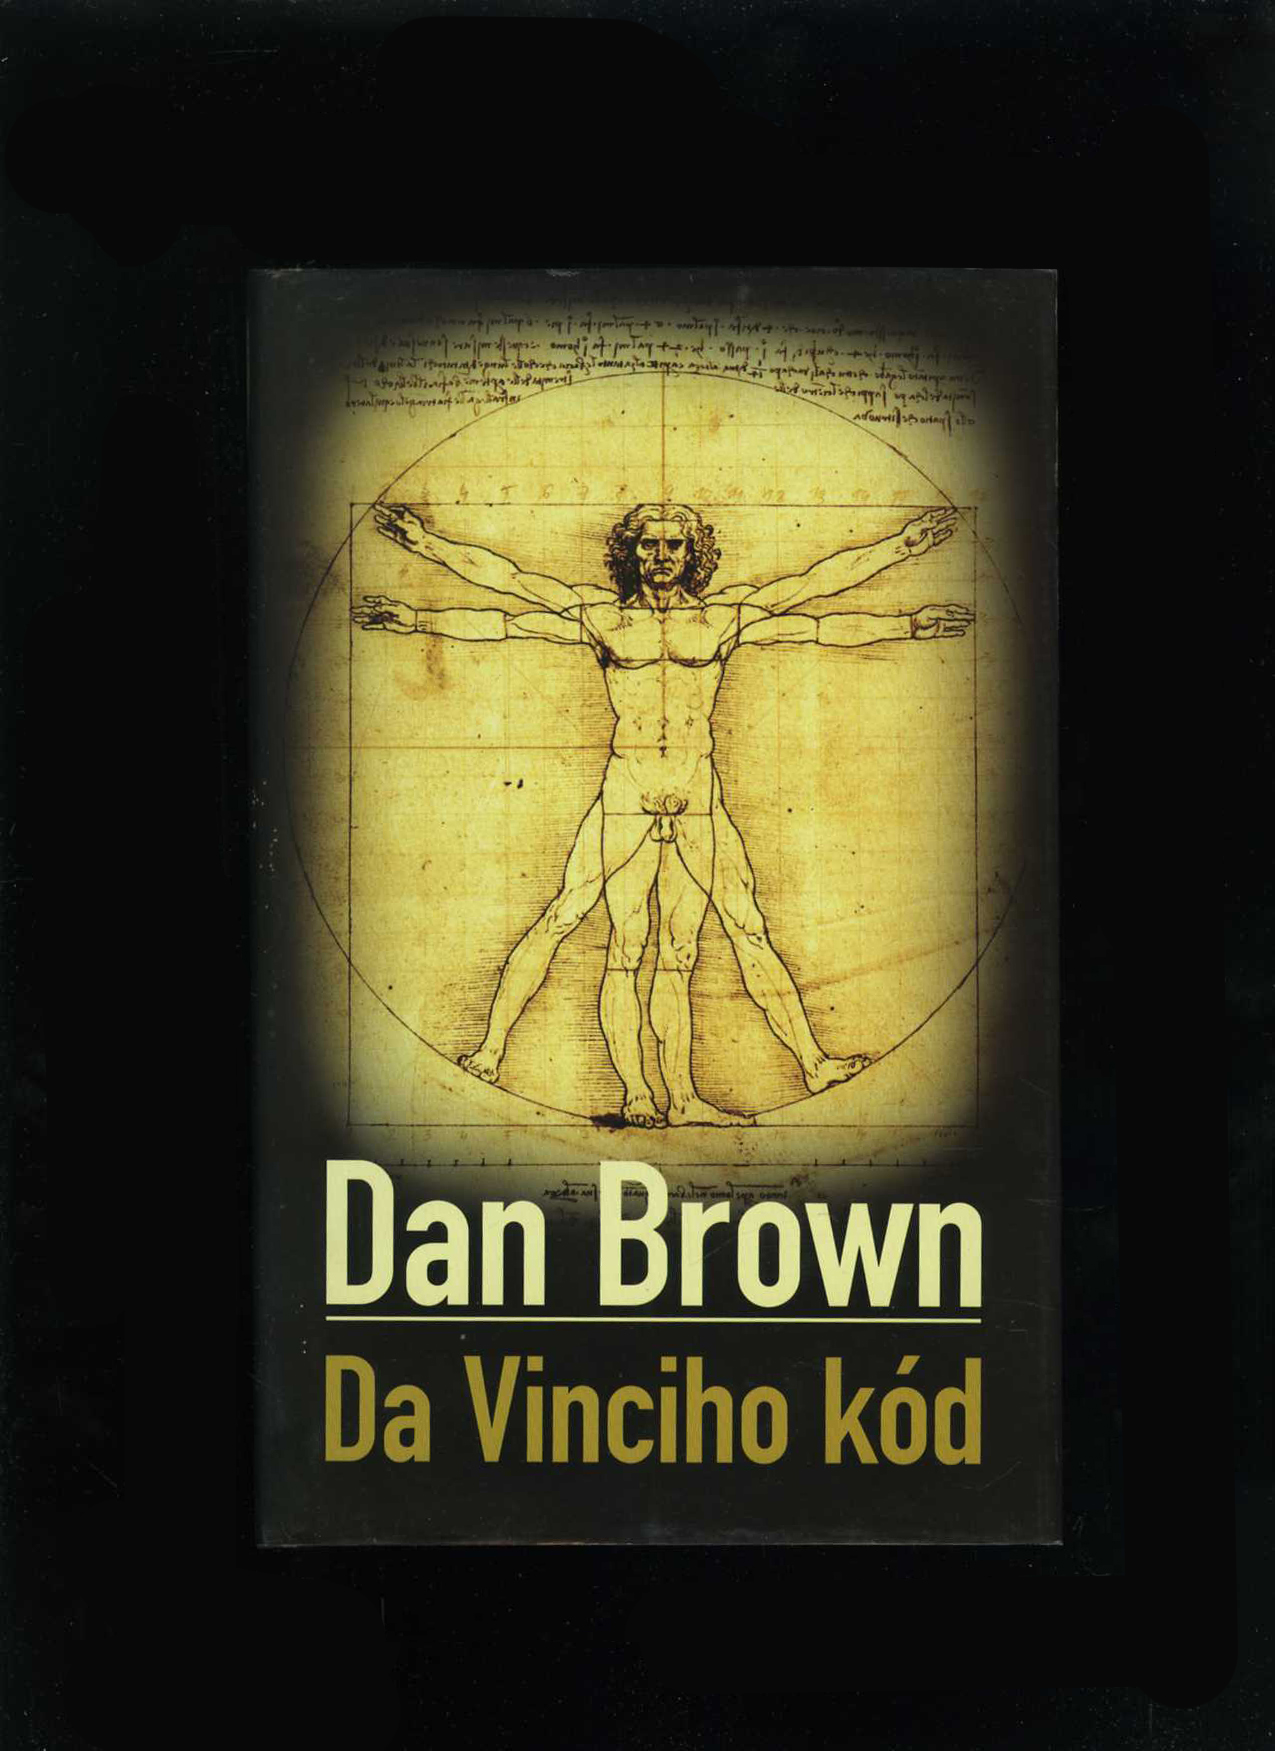 Da Vinciho kód (Dan Brown)